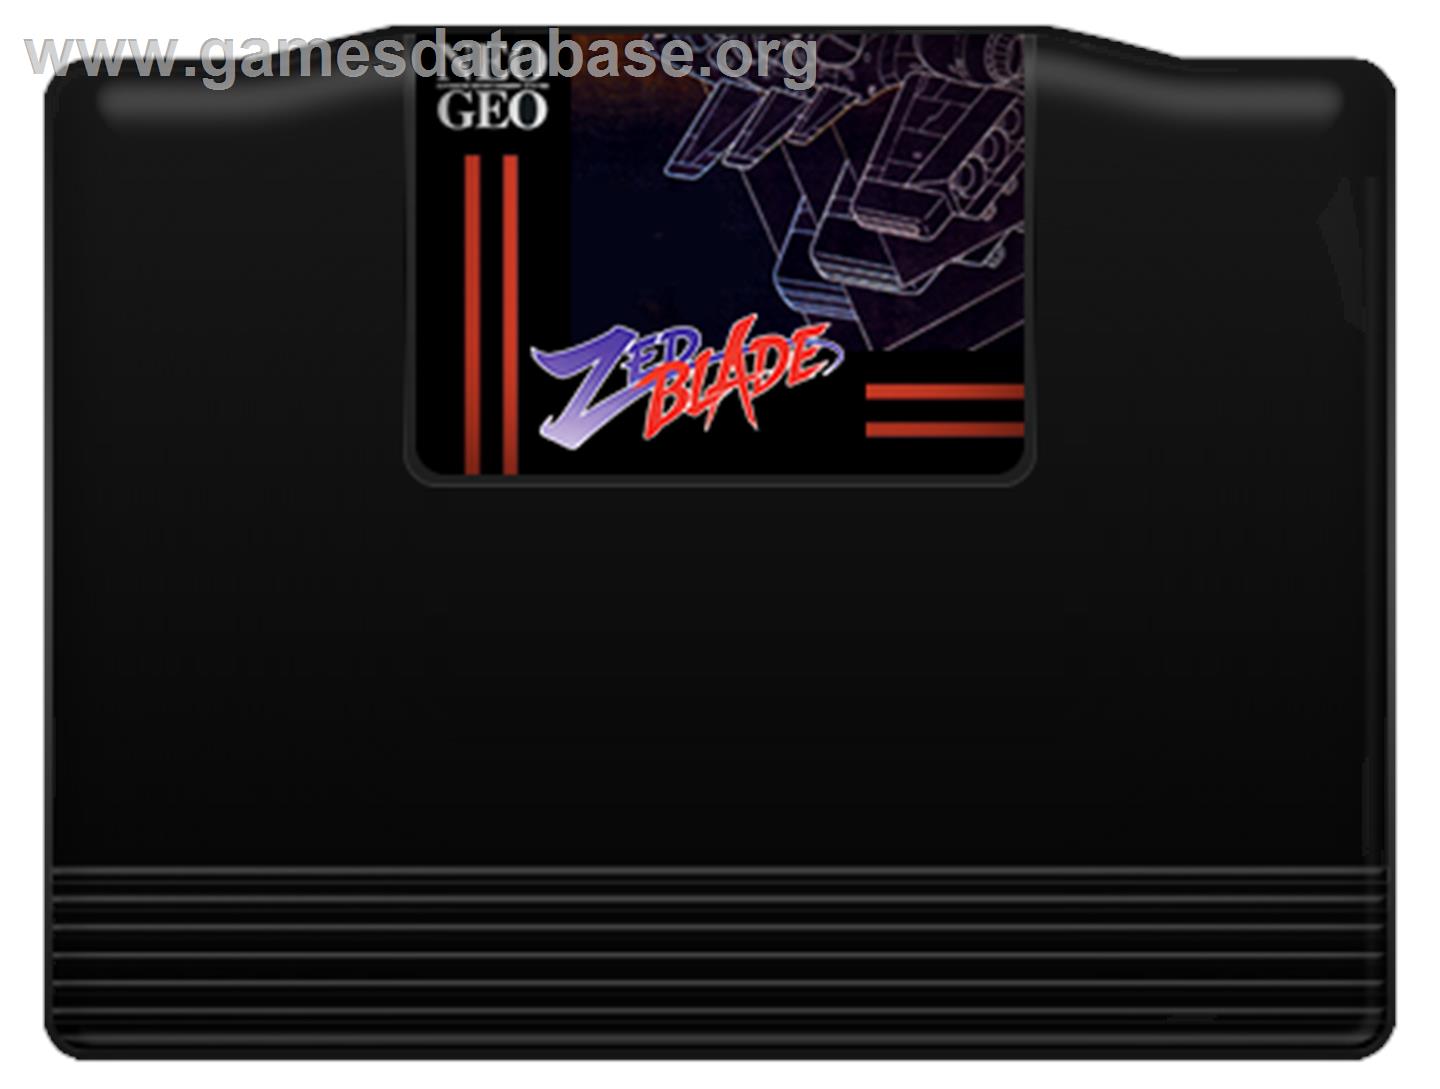 Zed Blade - SNK Neo-Geo MVS - Artwork - Cartridge